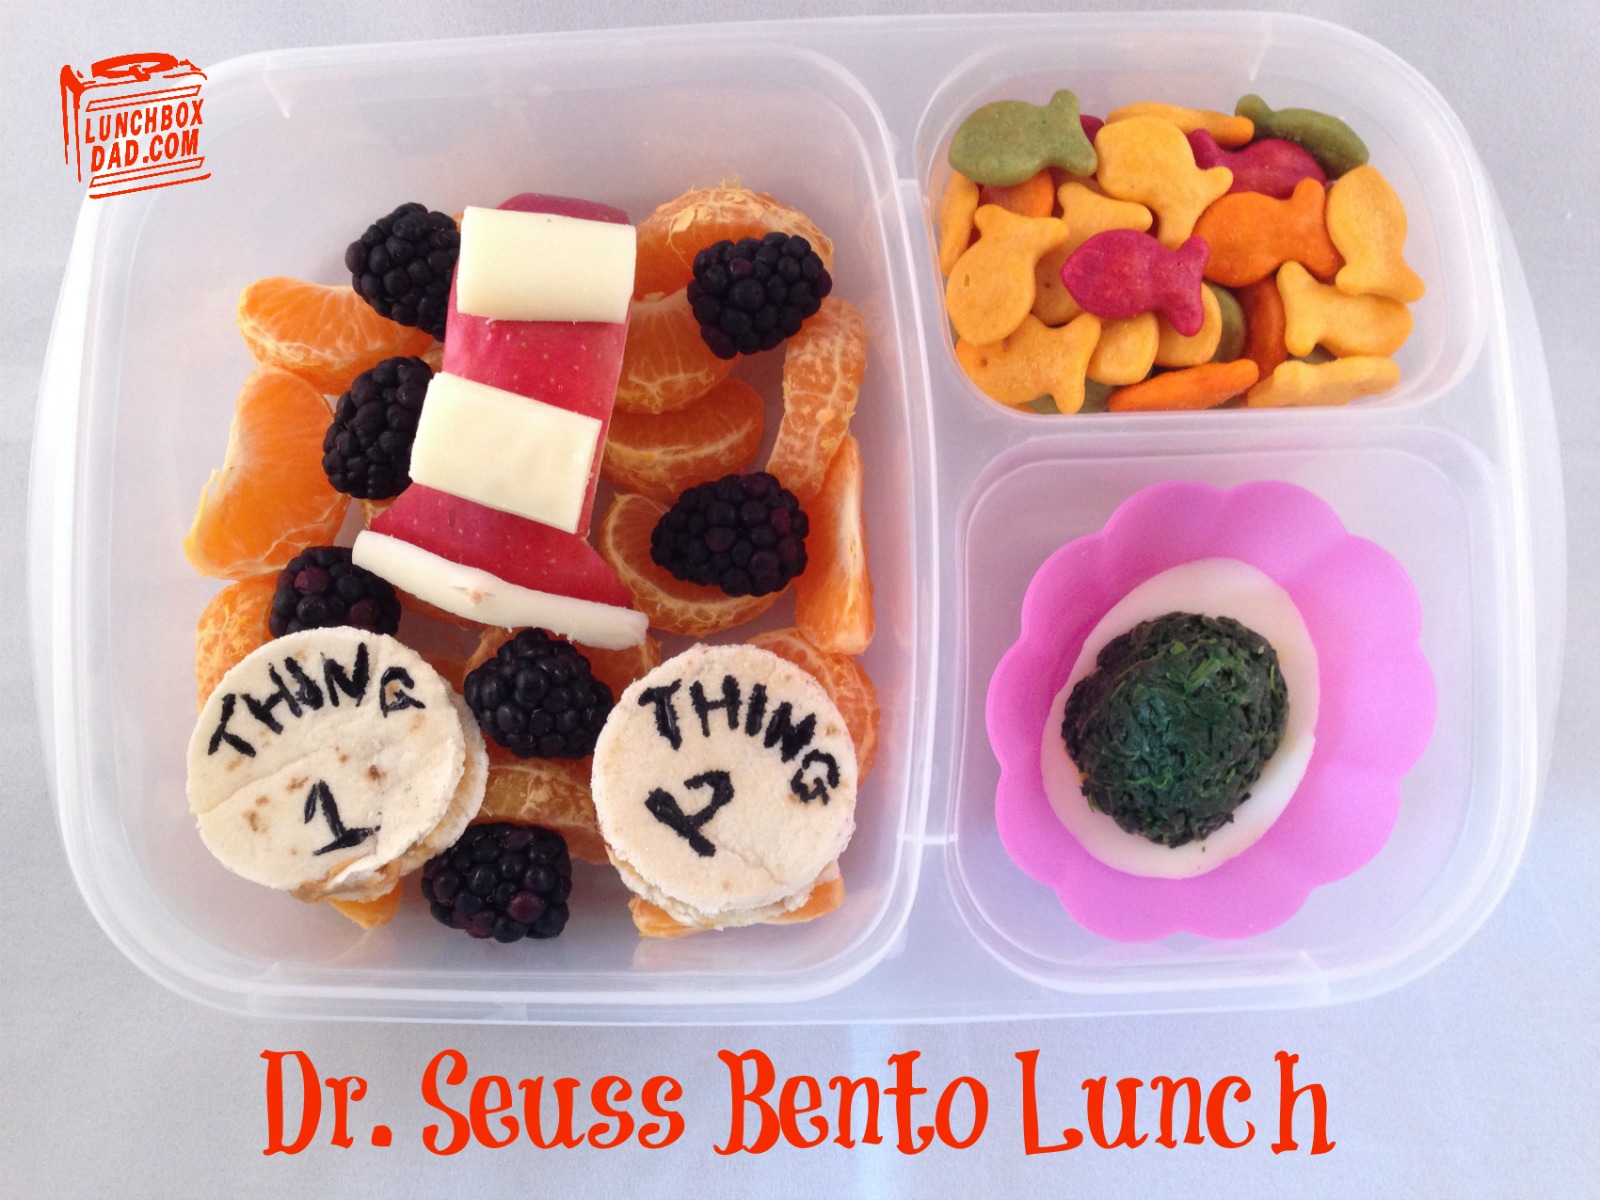 Dr. Seuss Bento Lunch